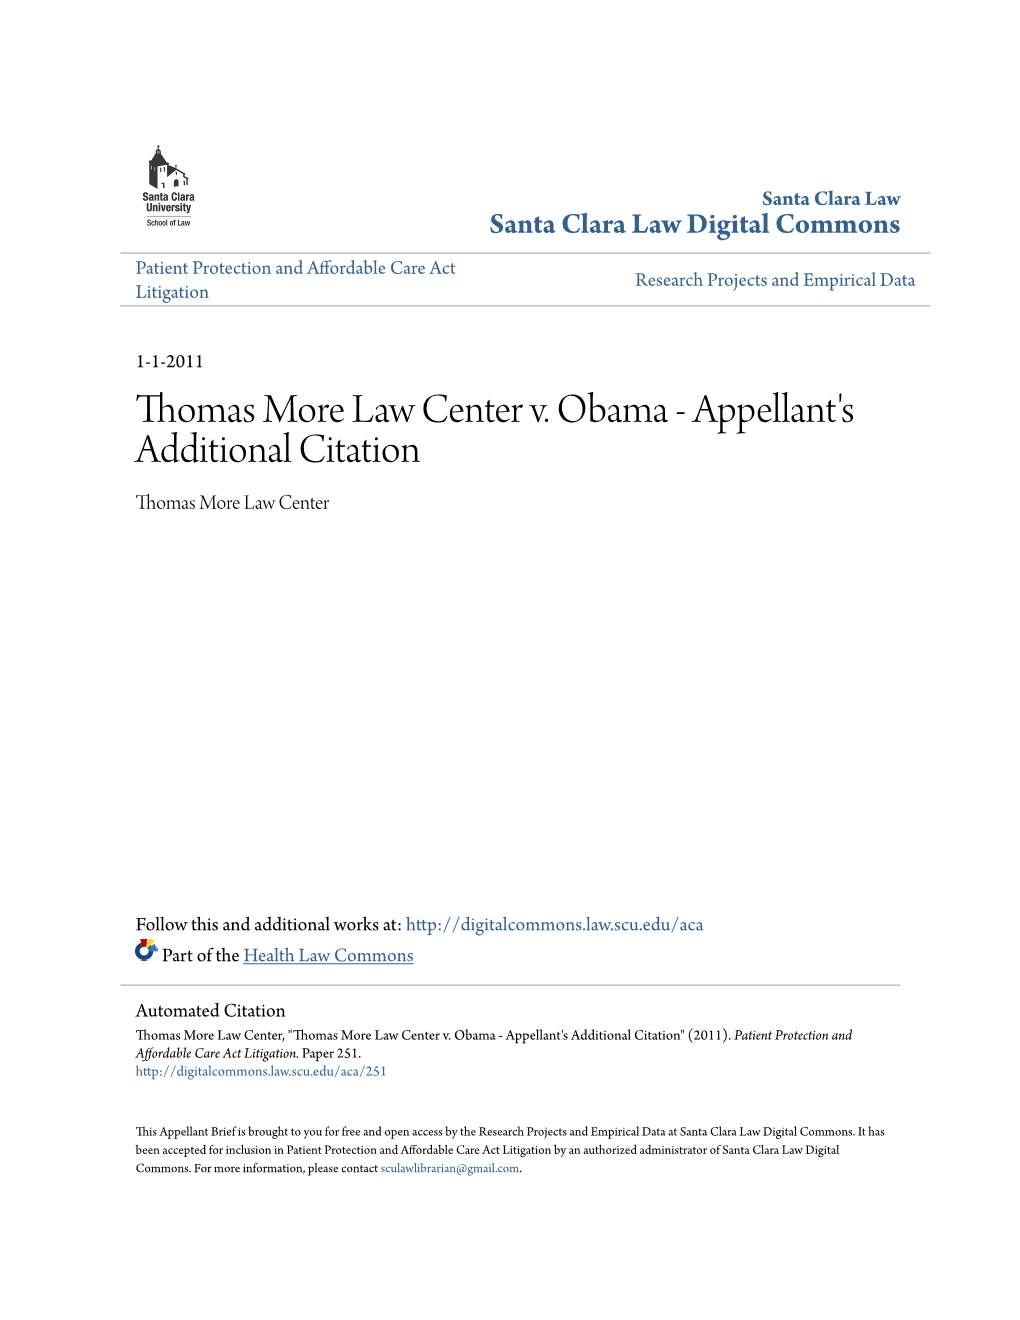 Thomas More Law Center V. Obama - Appellant's Additional Citation Thomas More Law Center